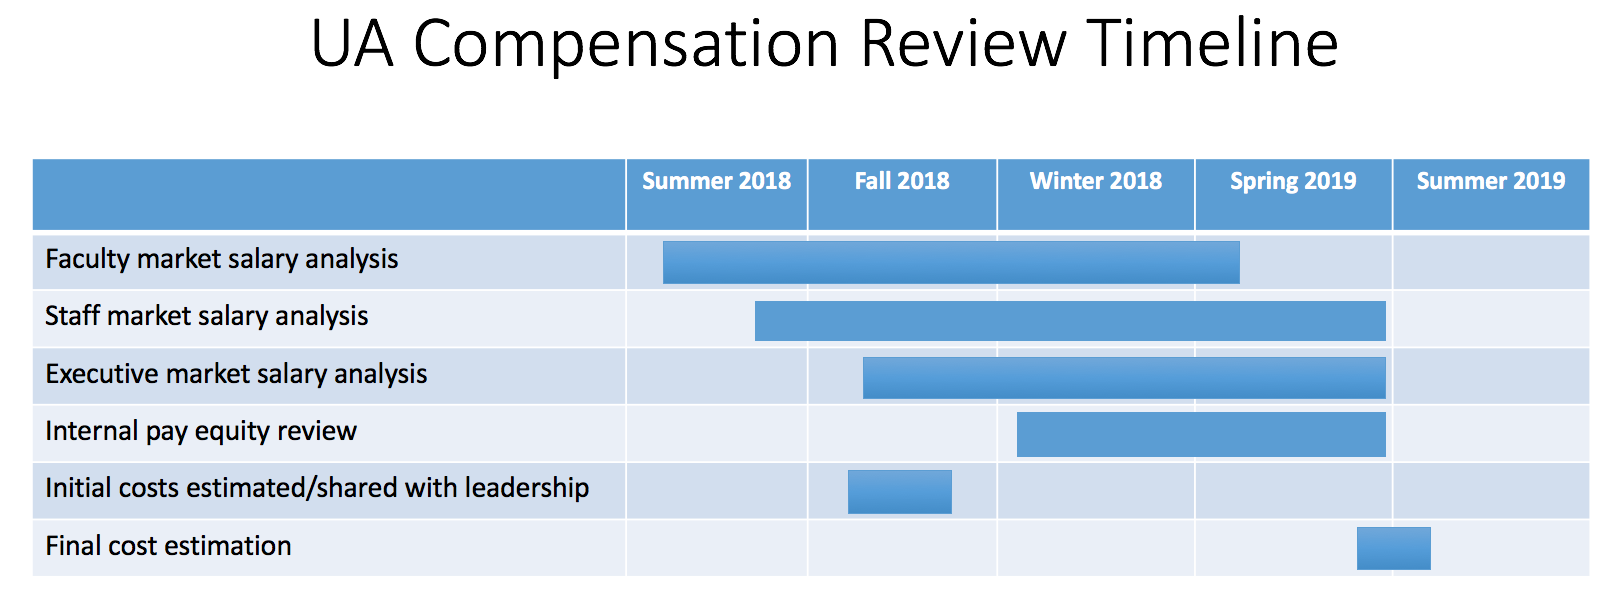 ua compensation review timeline